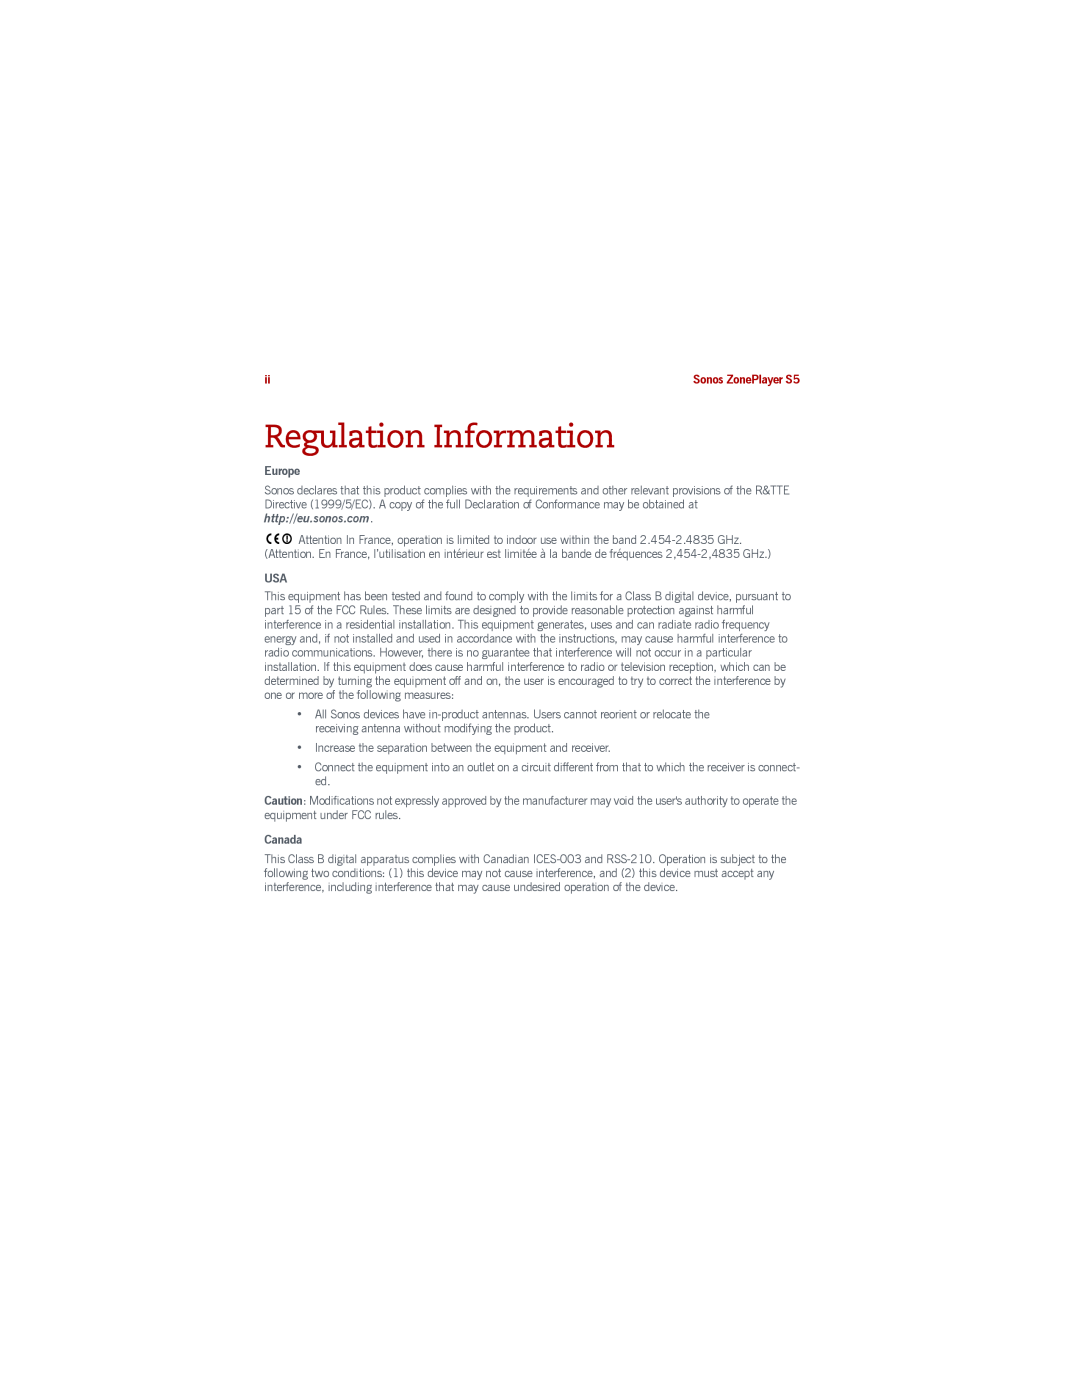 Sonos S5 manual Regulation Information, English, Europe, Canada 